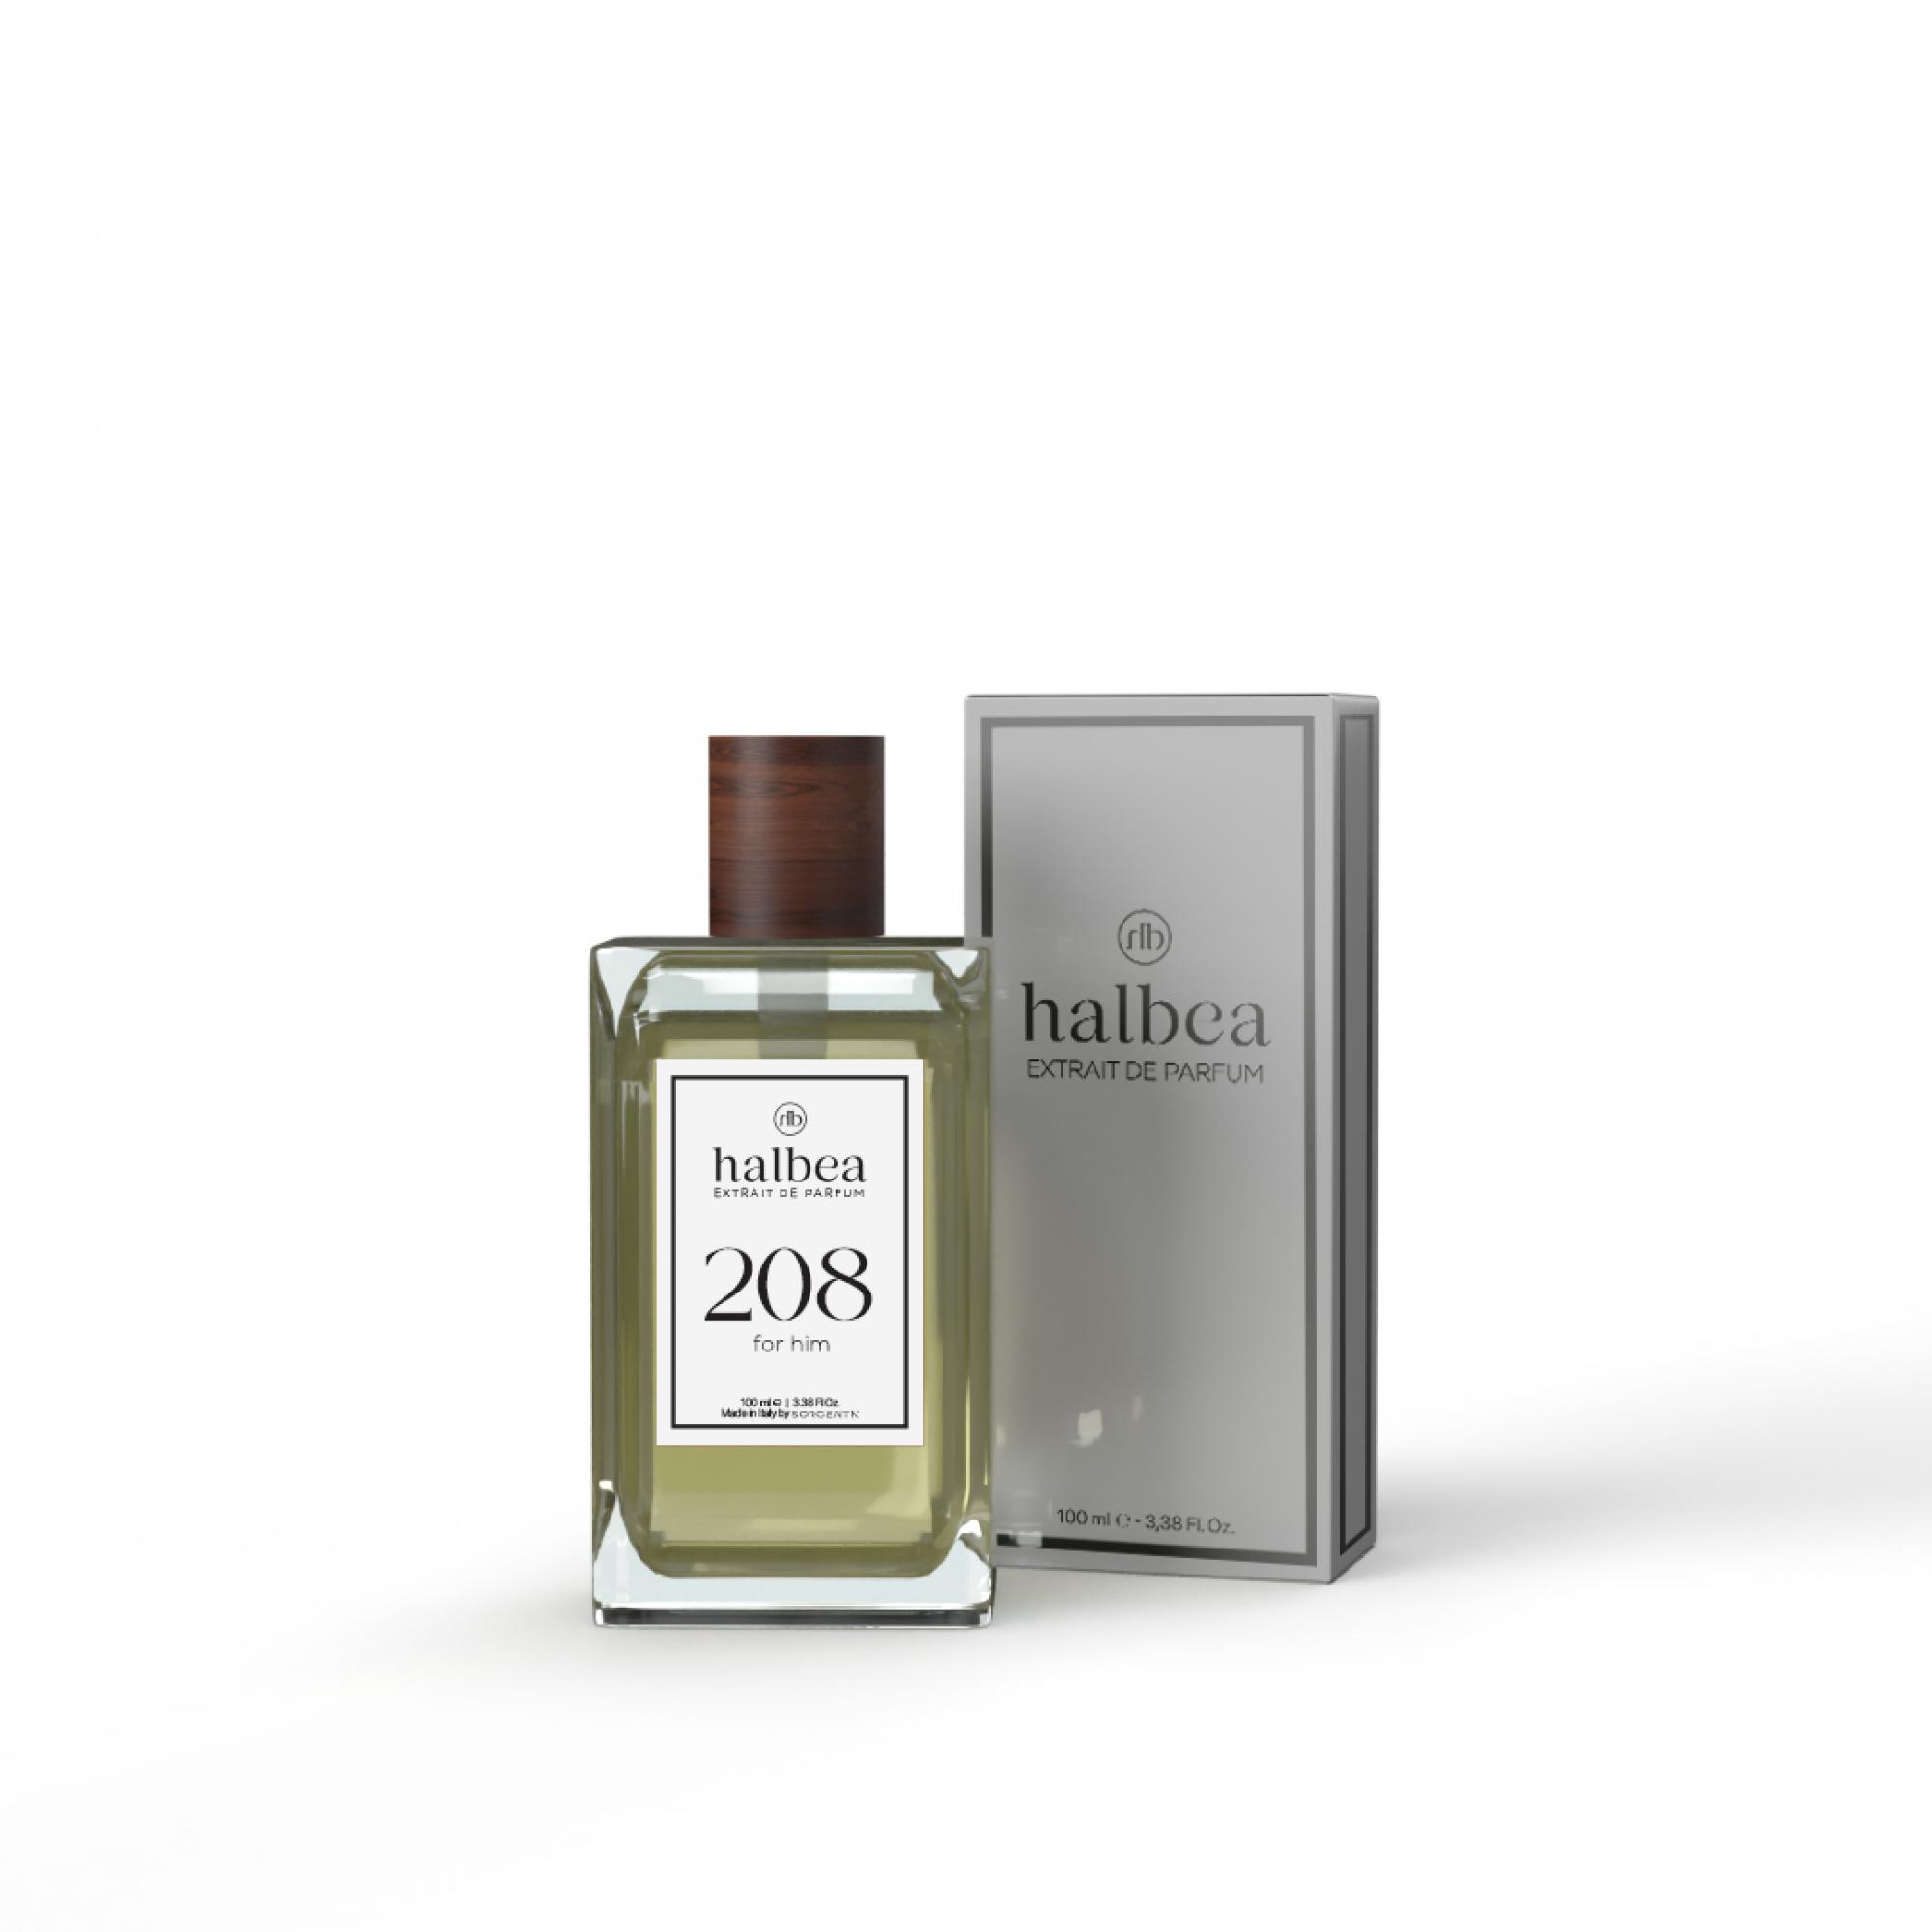  Halbea Parfum Nr. 208 insp. by Chanel Allure Homme Sorgenta Duftwzillinge 100ml